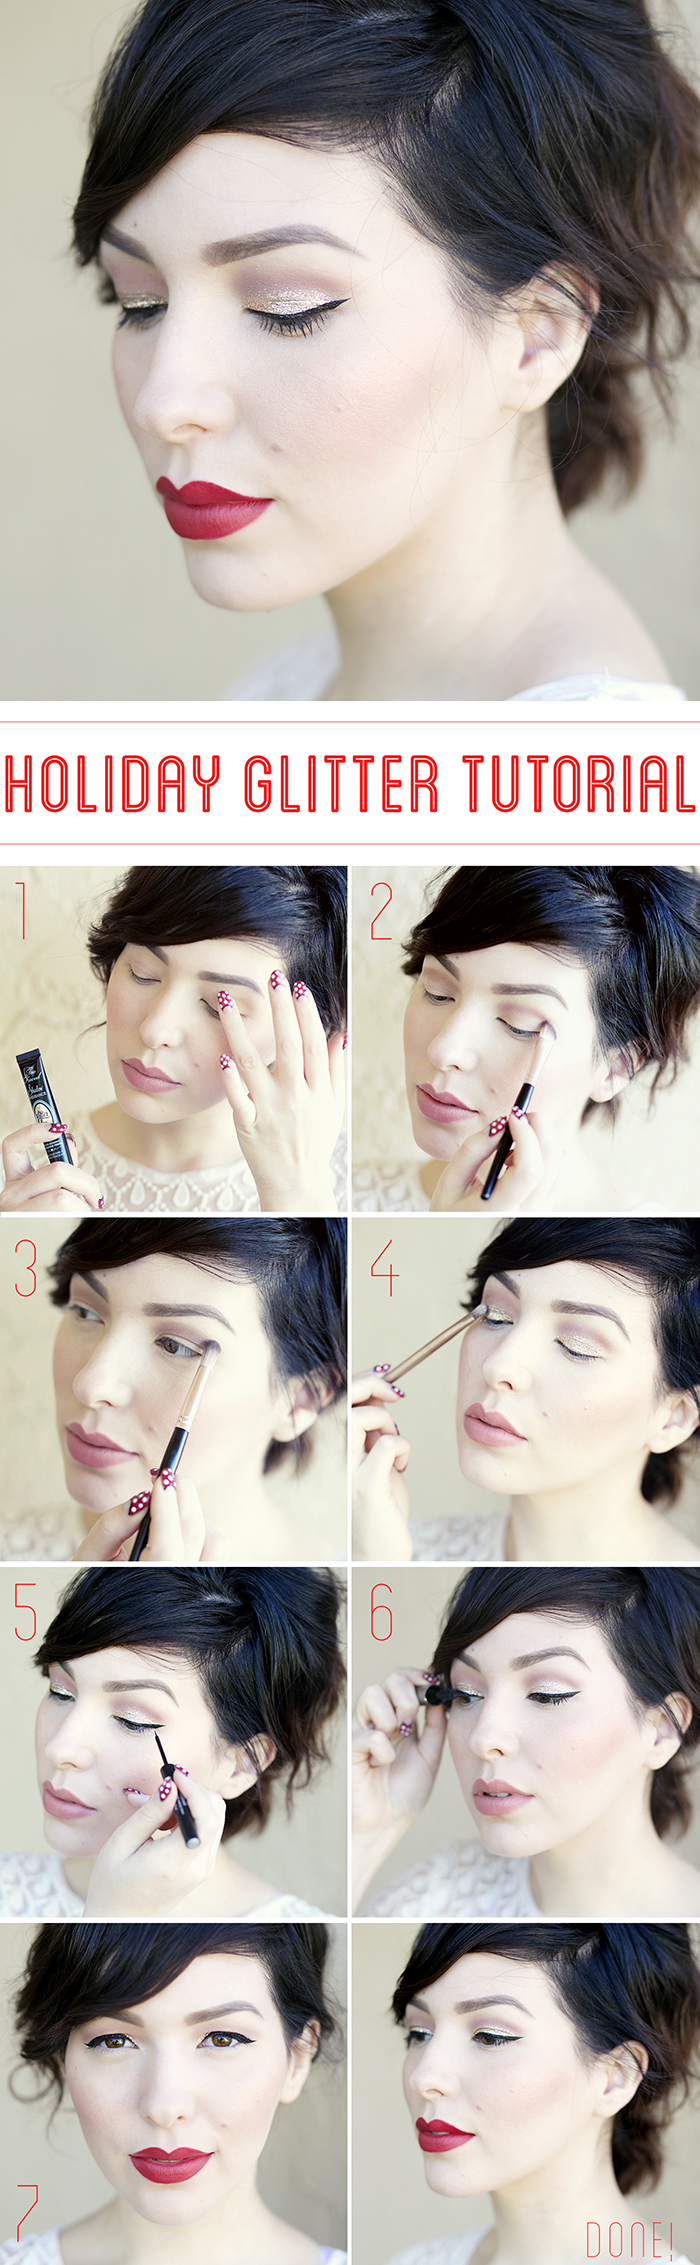 Holiday Glitter Makeup Tutorial